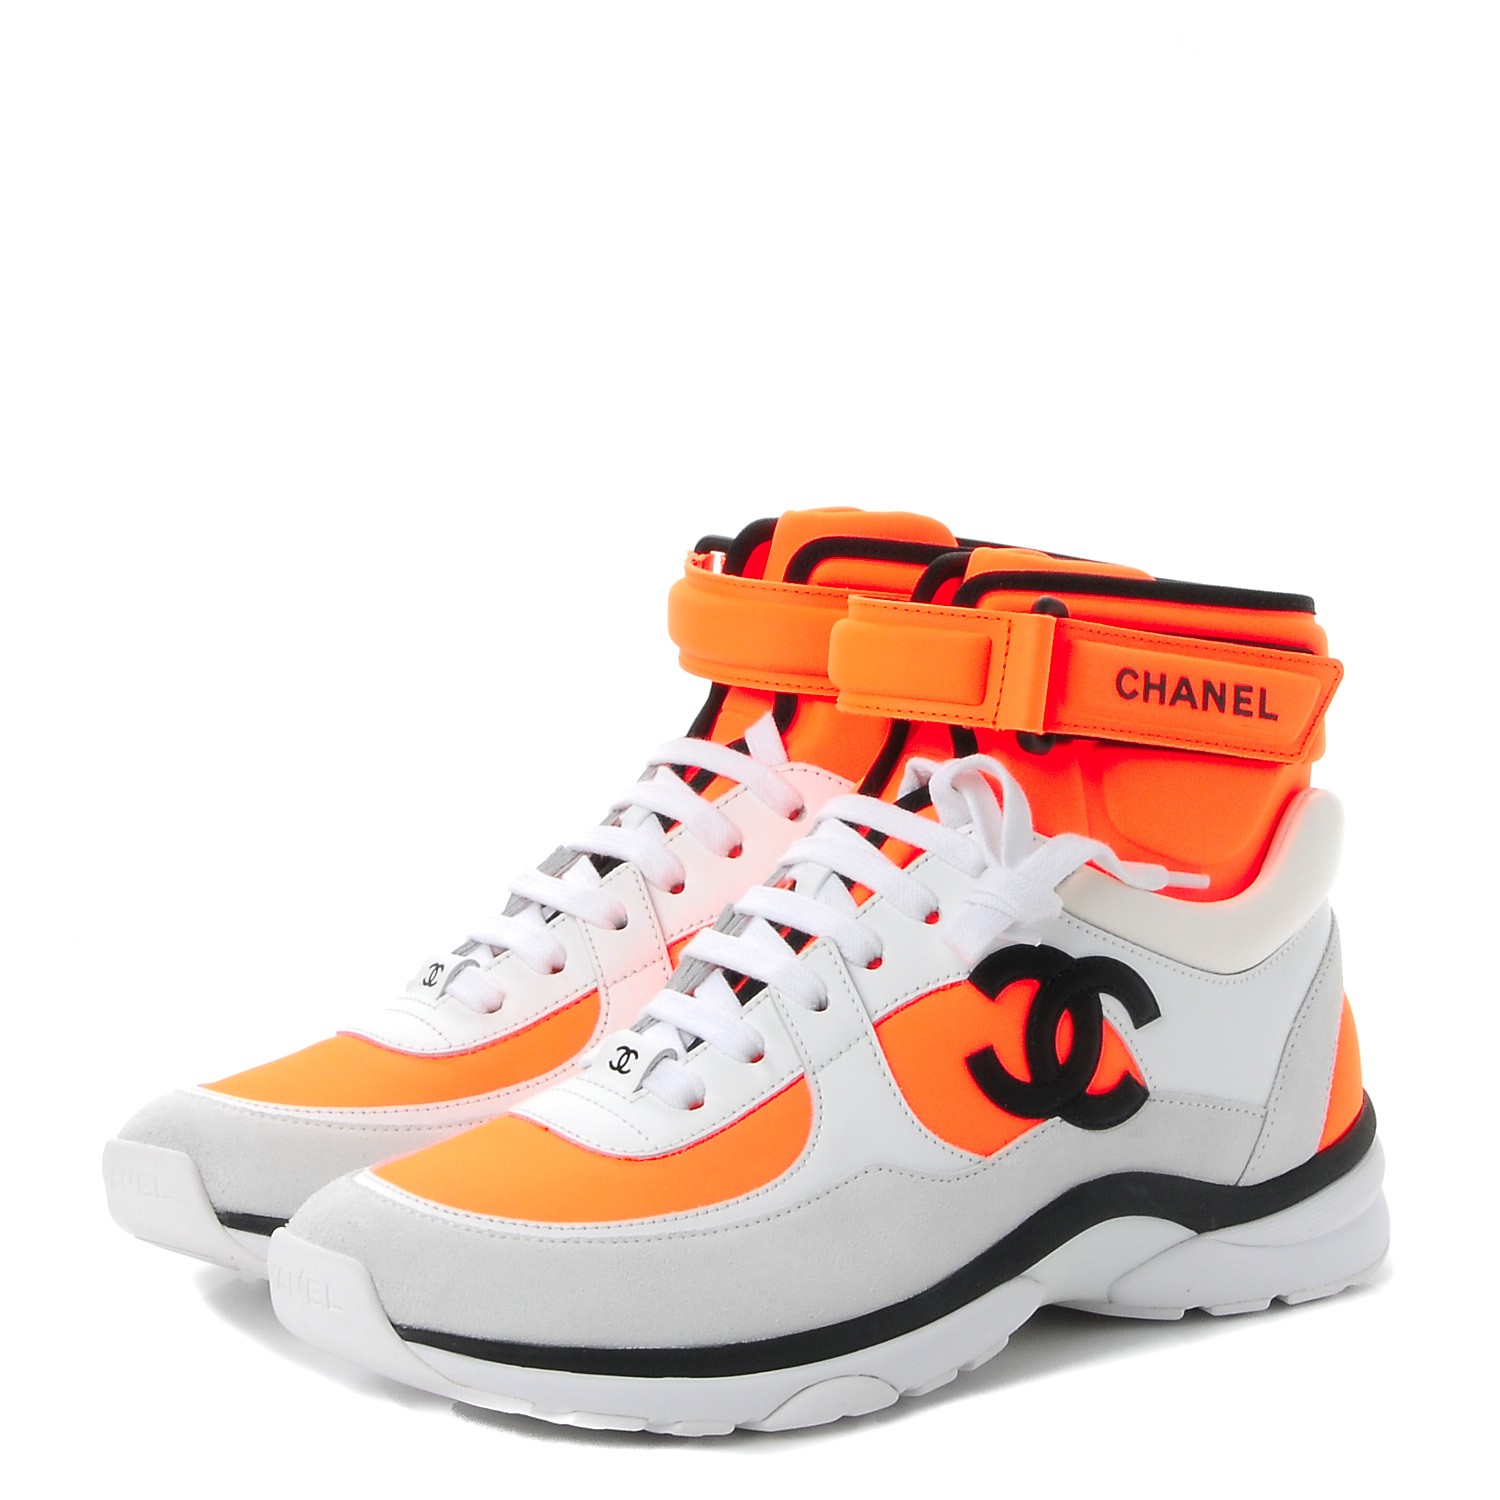 chanel neon orange sneakers